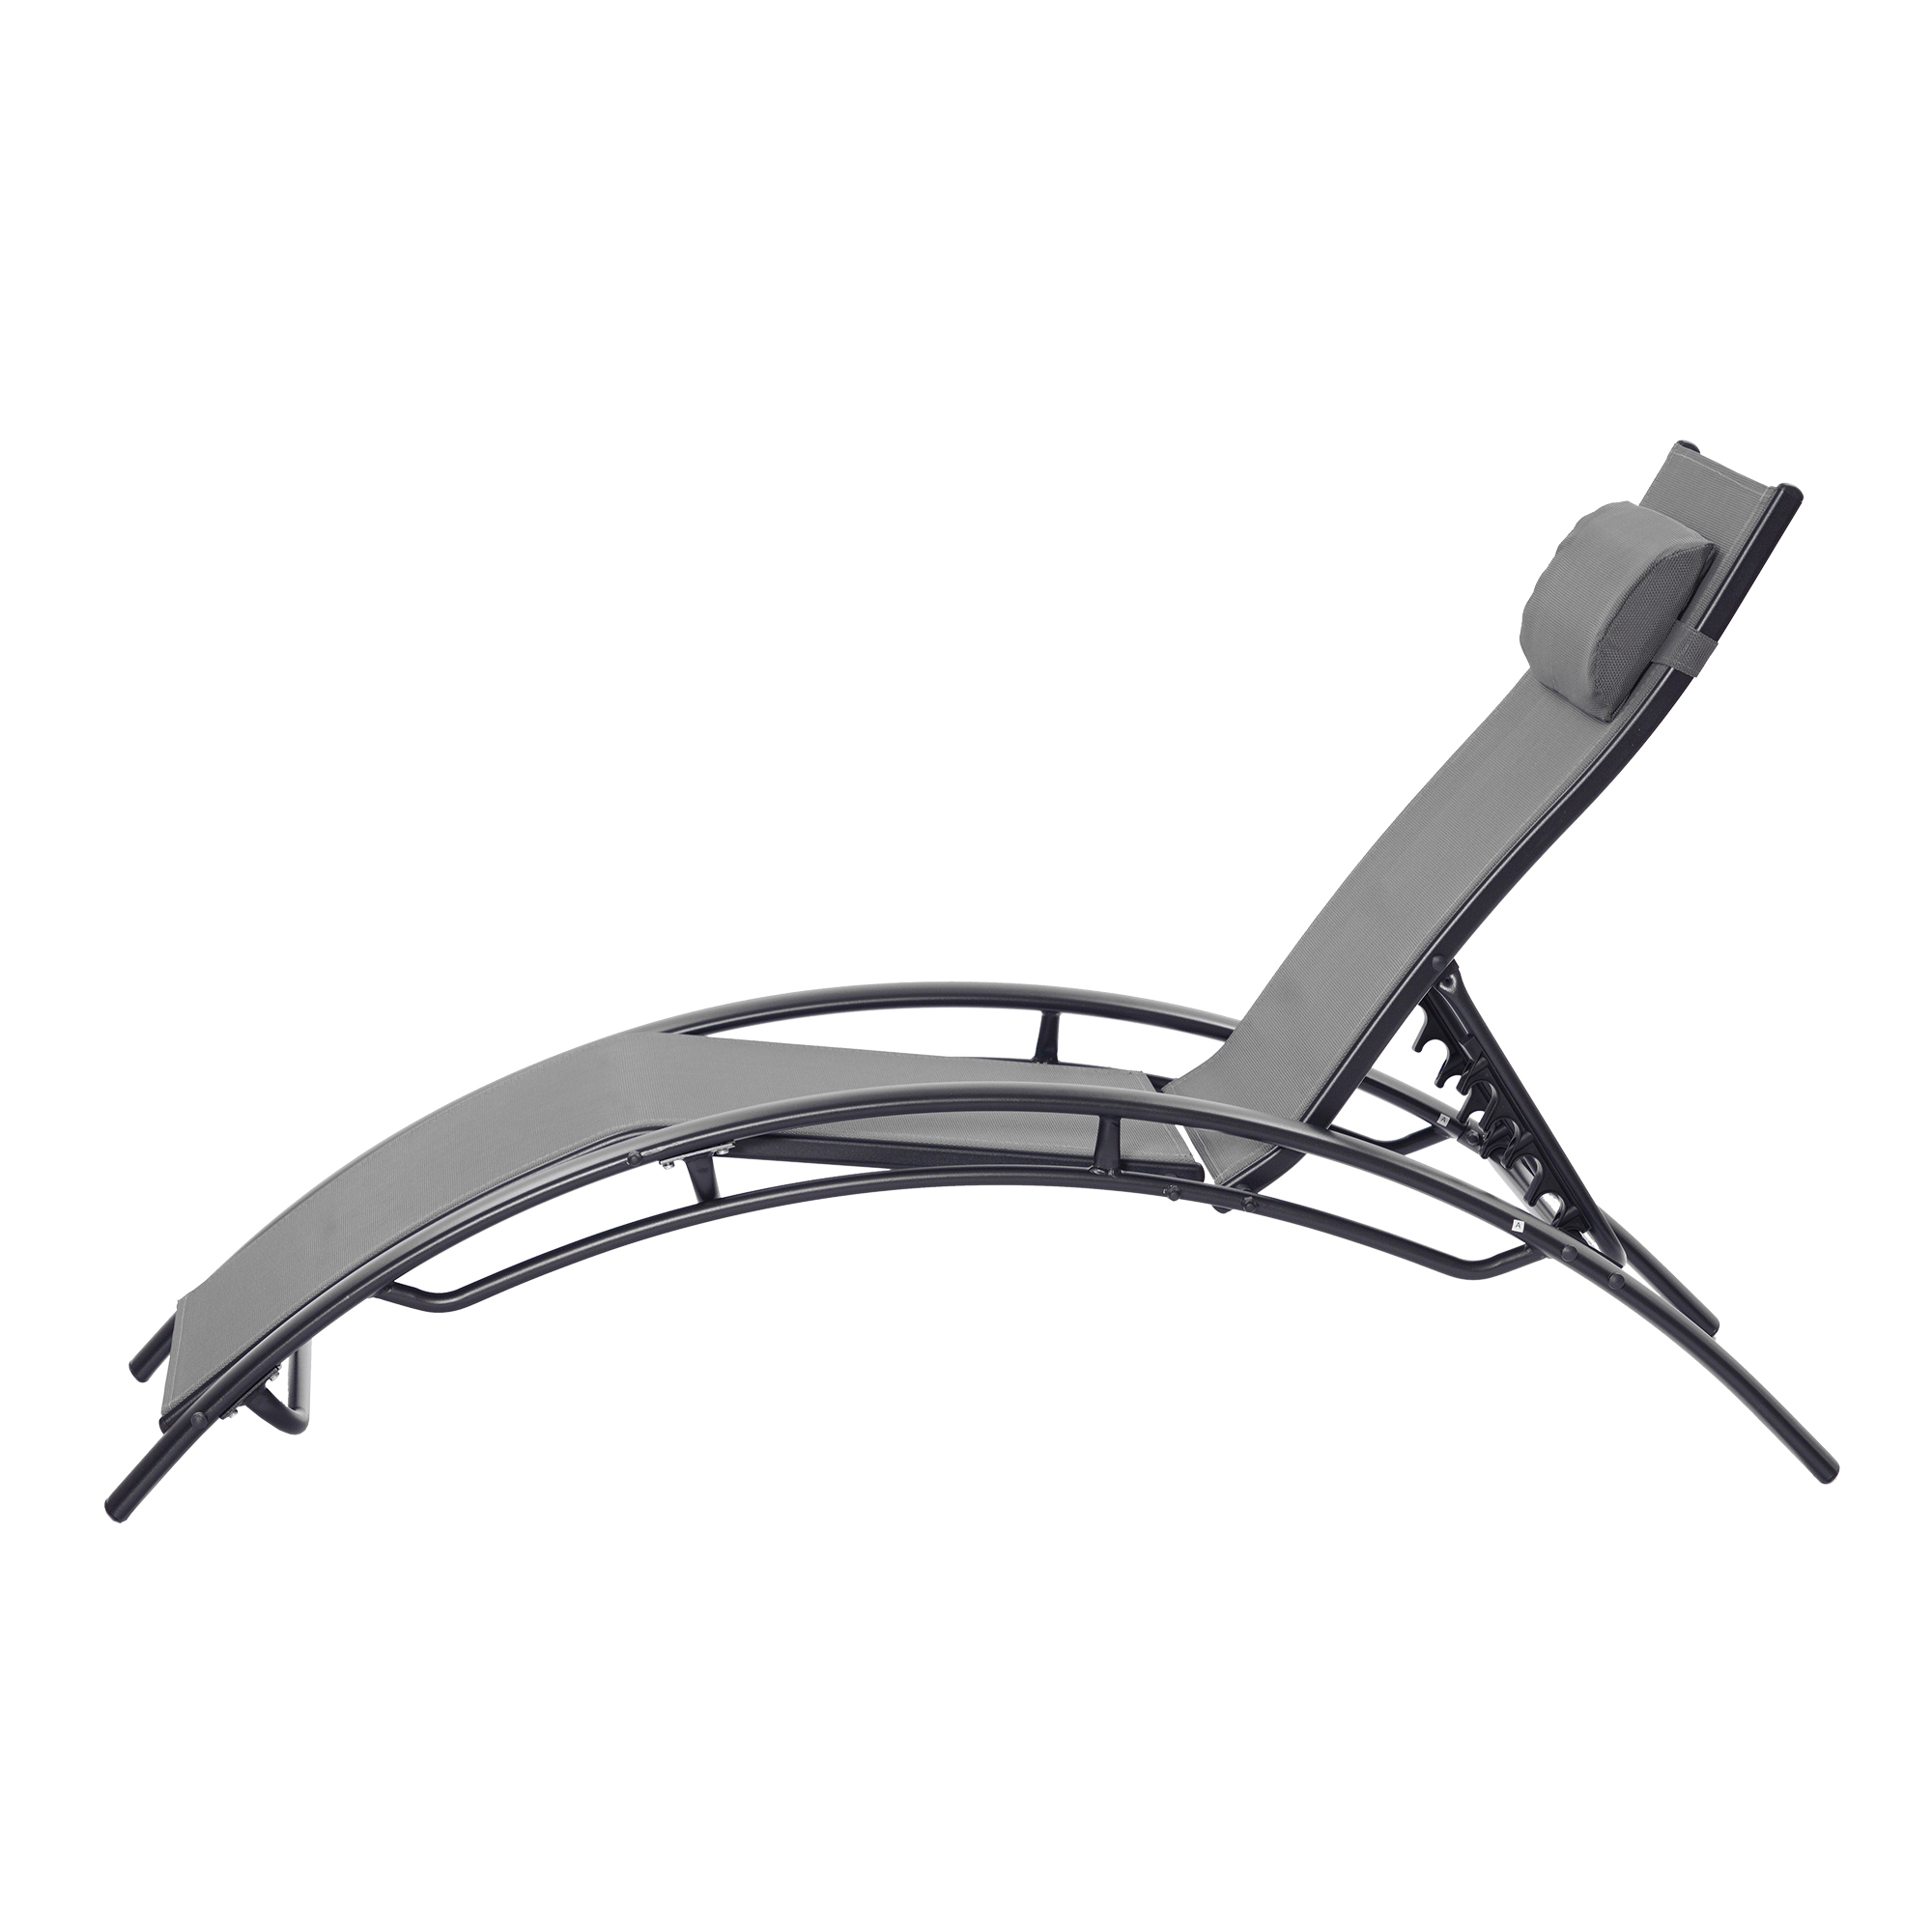 Hassch 2PCS Outdoor Chaise Lounges Aluminum Recliner Chair Beach Sun Chair, Gray - image 2 of 10